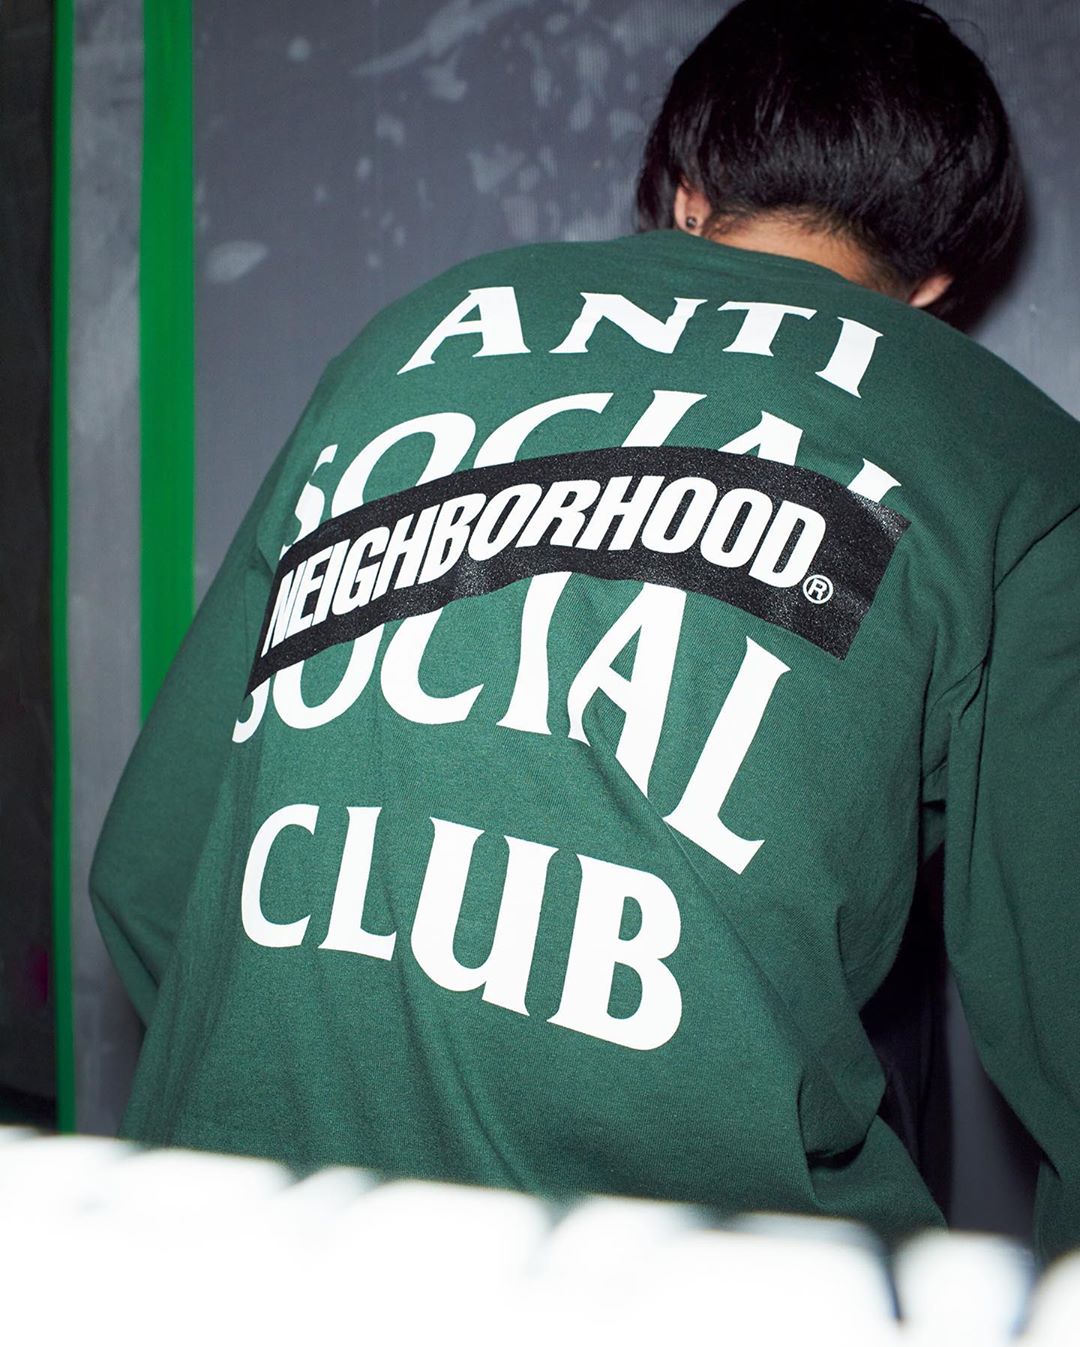 Anti Social Social Club Links With Neighborhood On Hoodie And T-Shirt